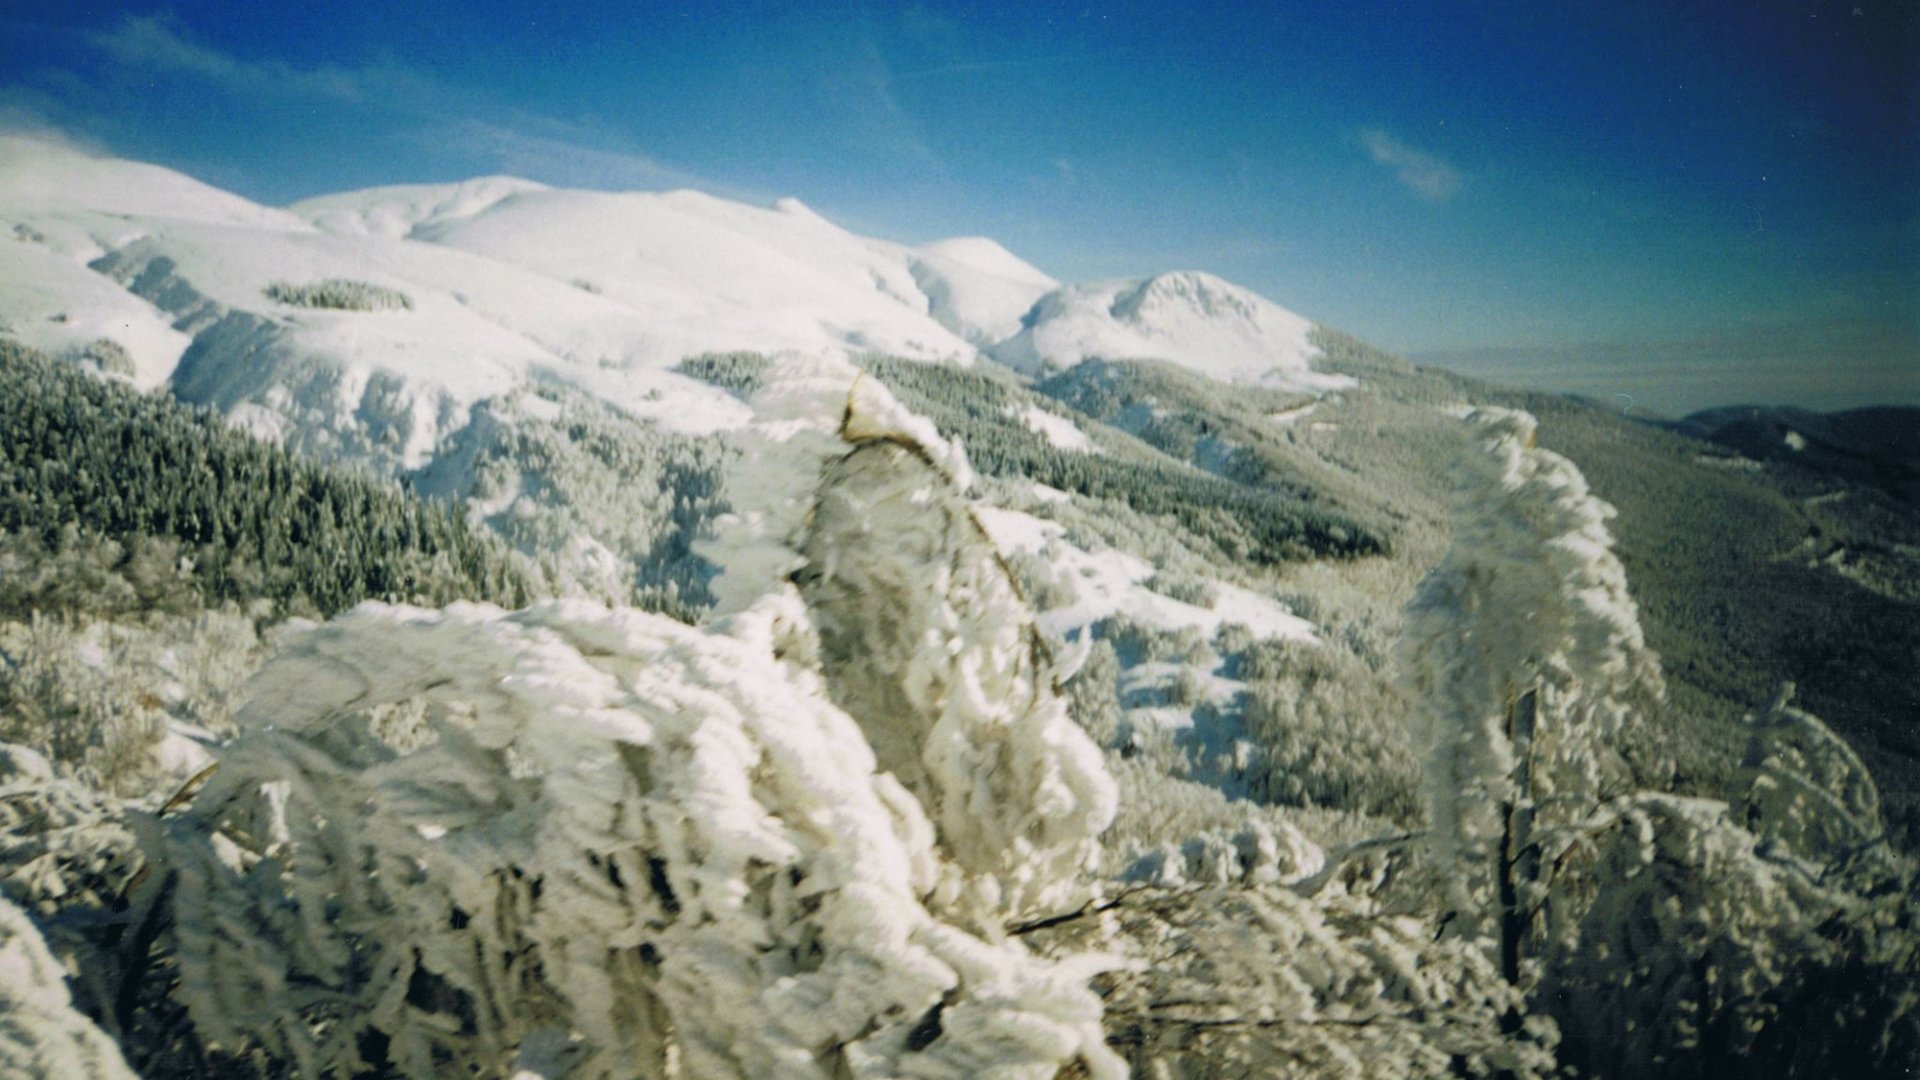 Doganaccia ski district